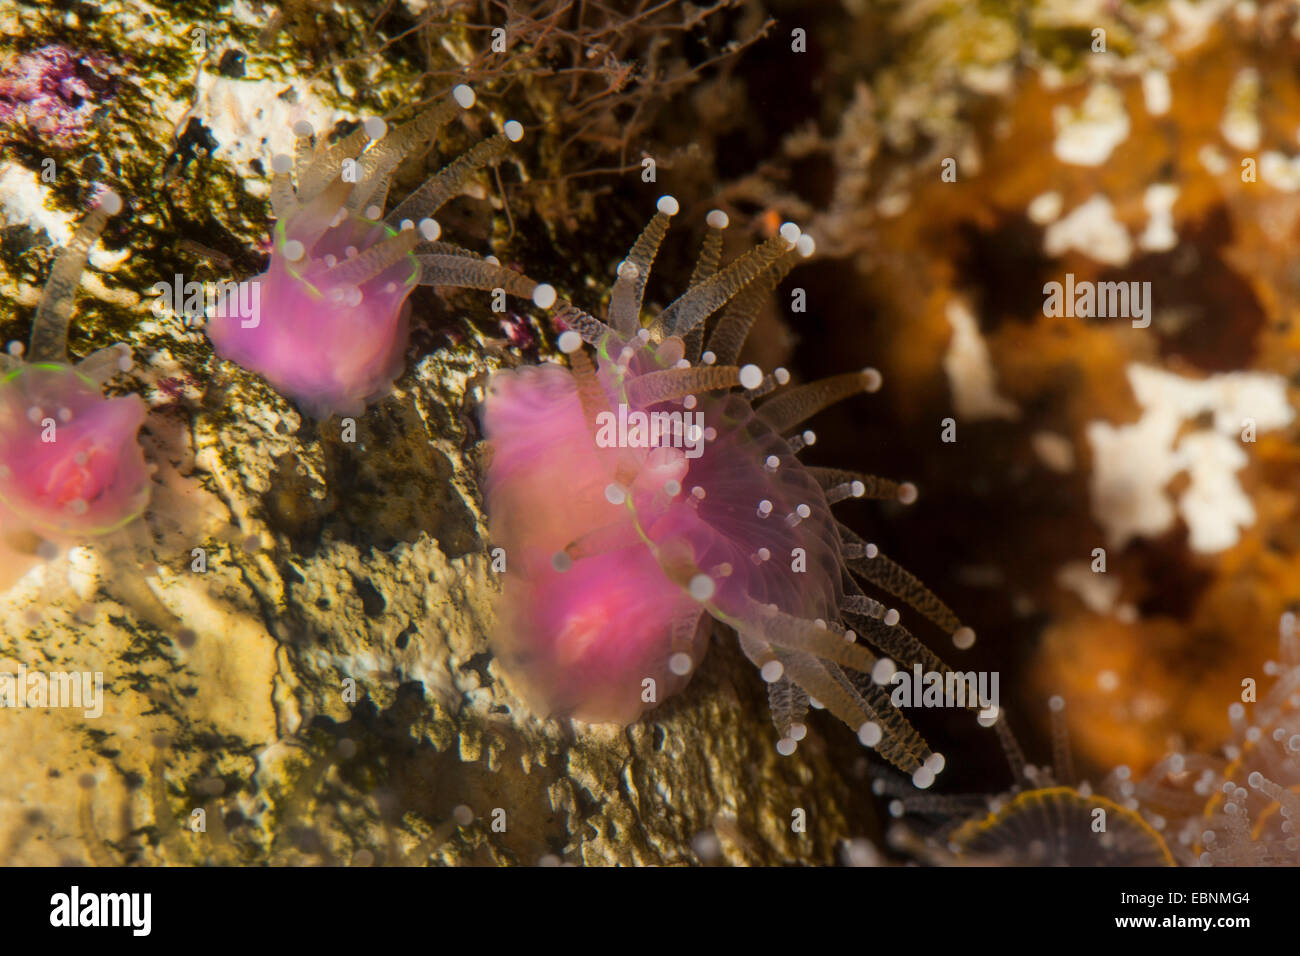 Green jewel anemone (Corynactis viridis), three anemones from above Stock Photo